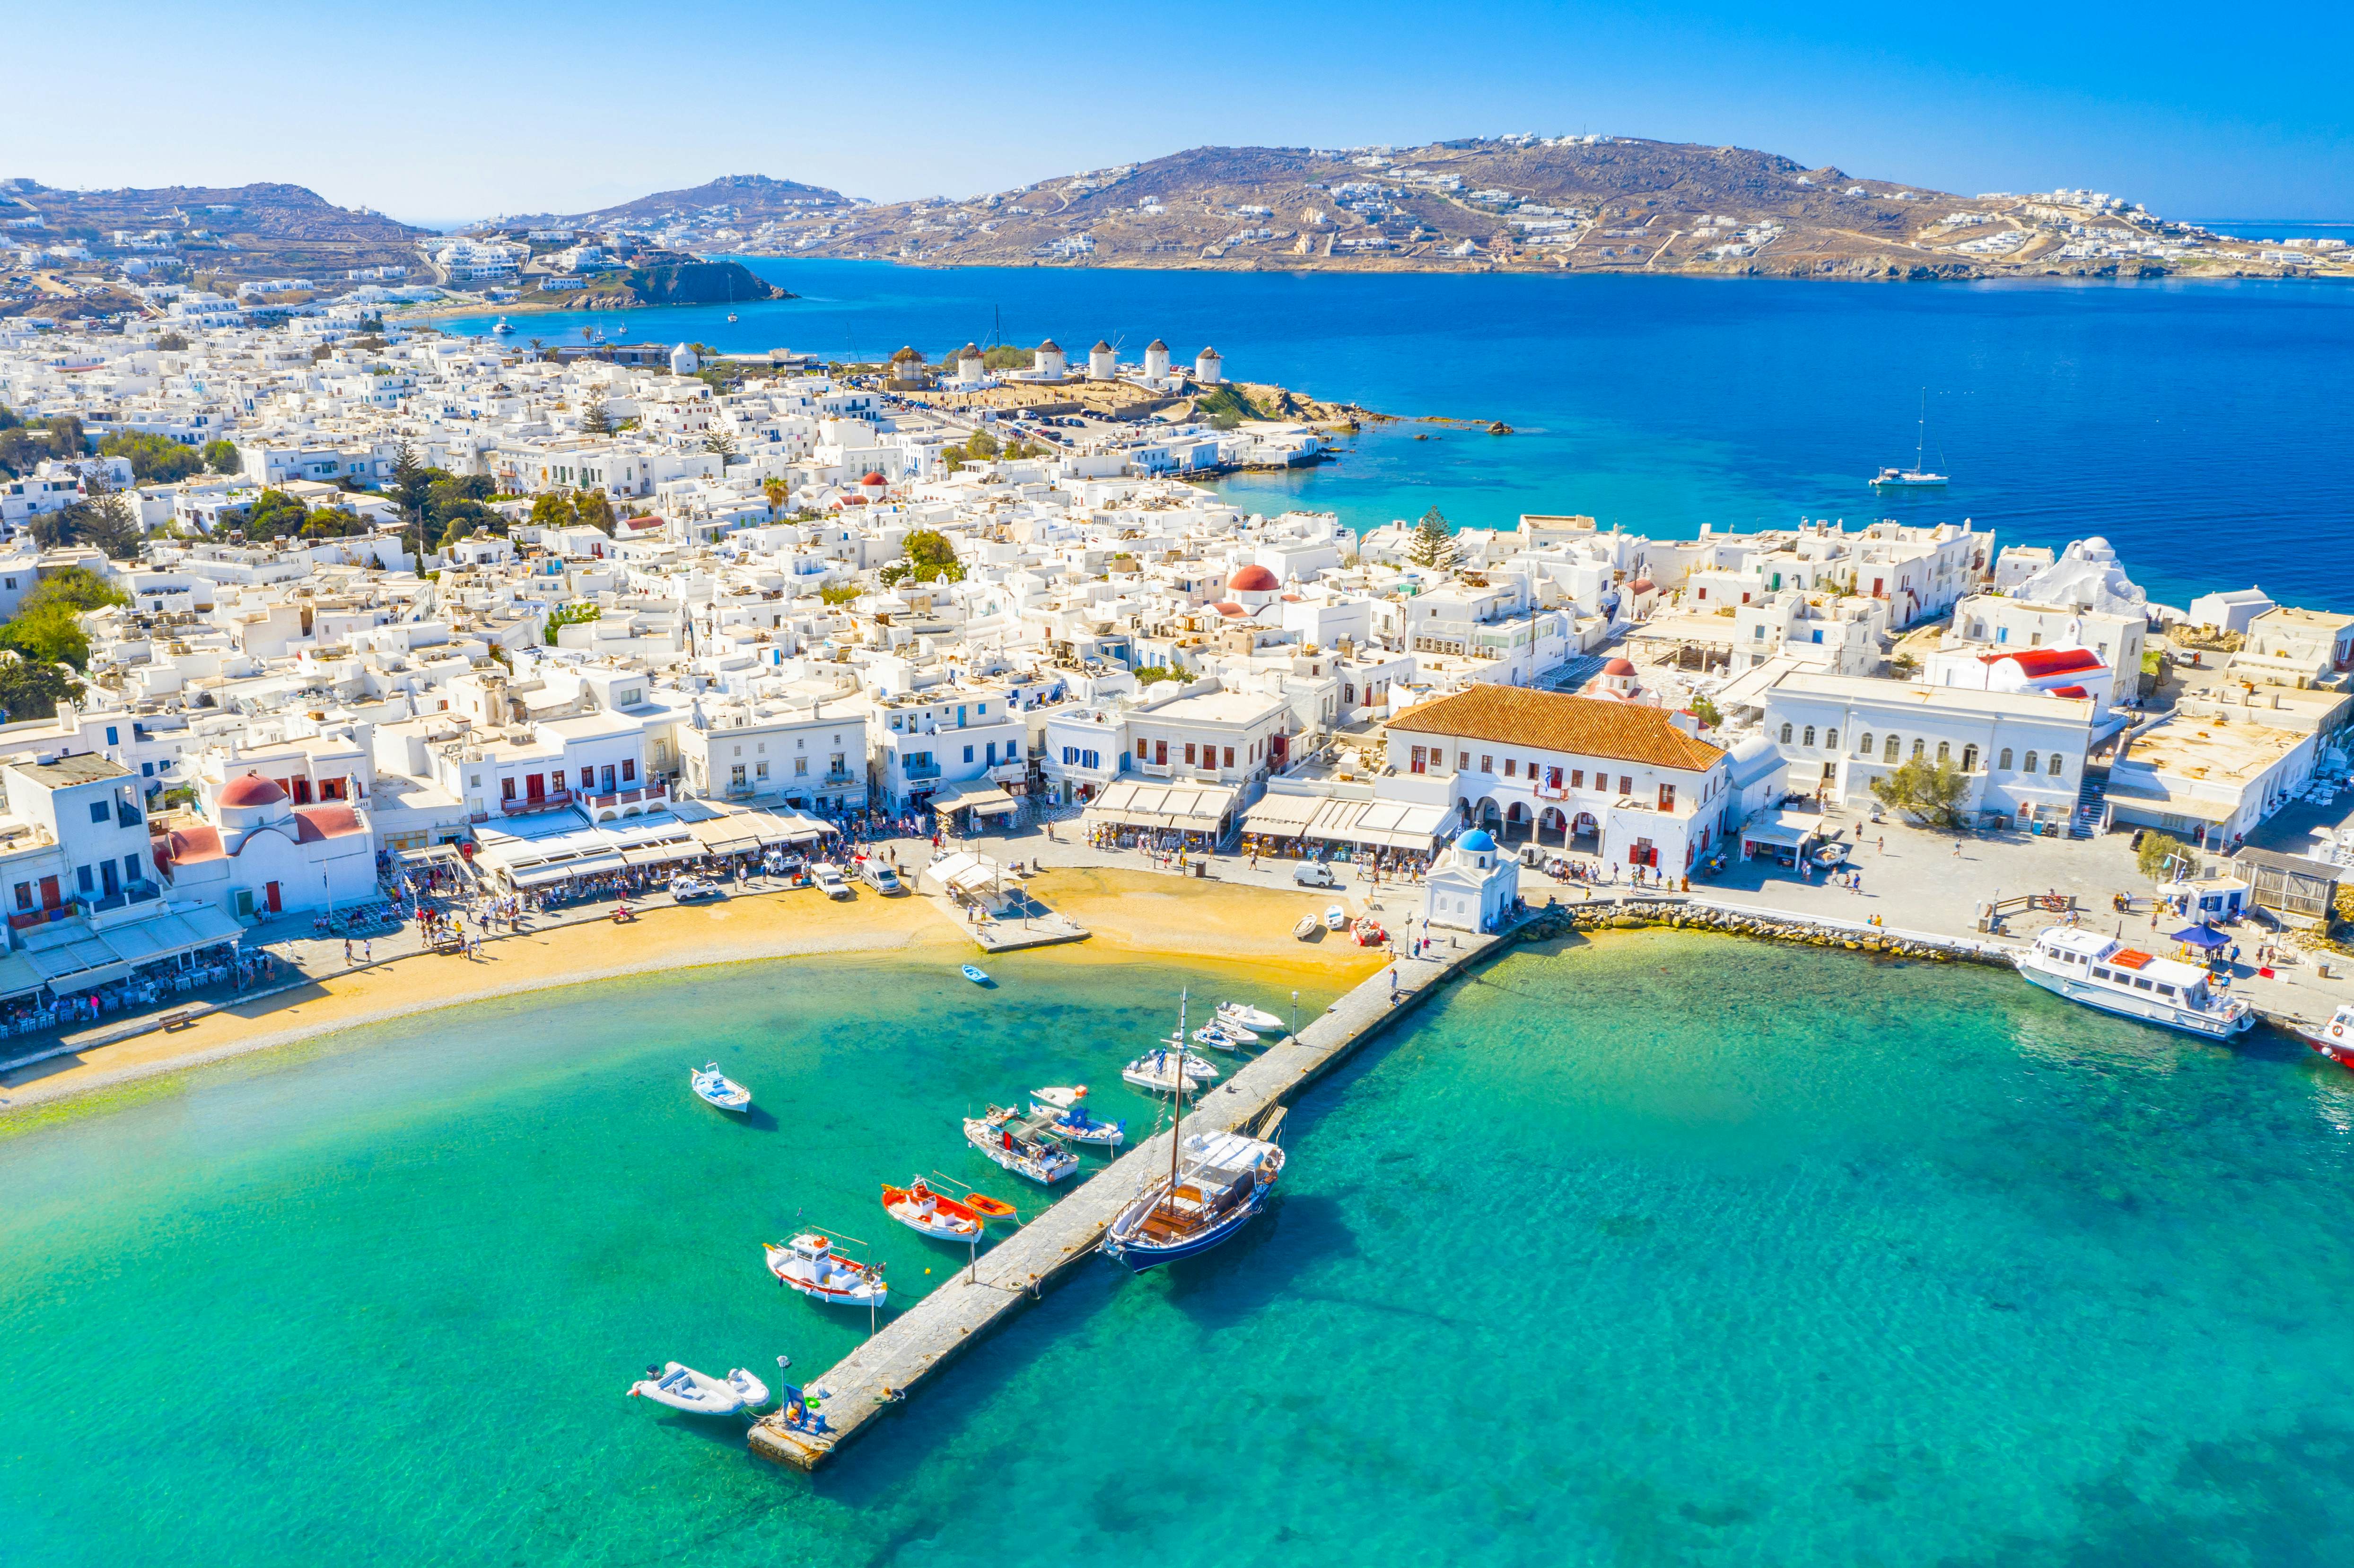 Greece Islands Travel Guide: Travel Tips For Greek Island Hopping